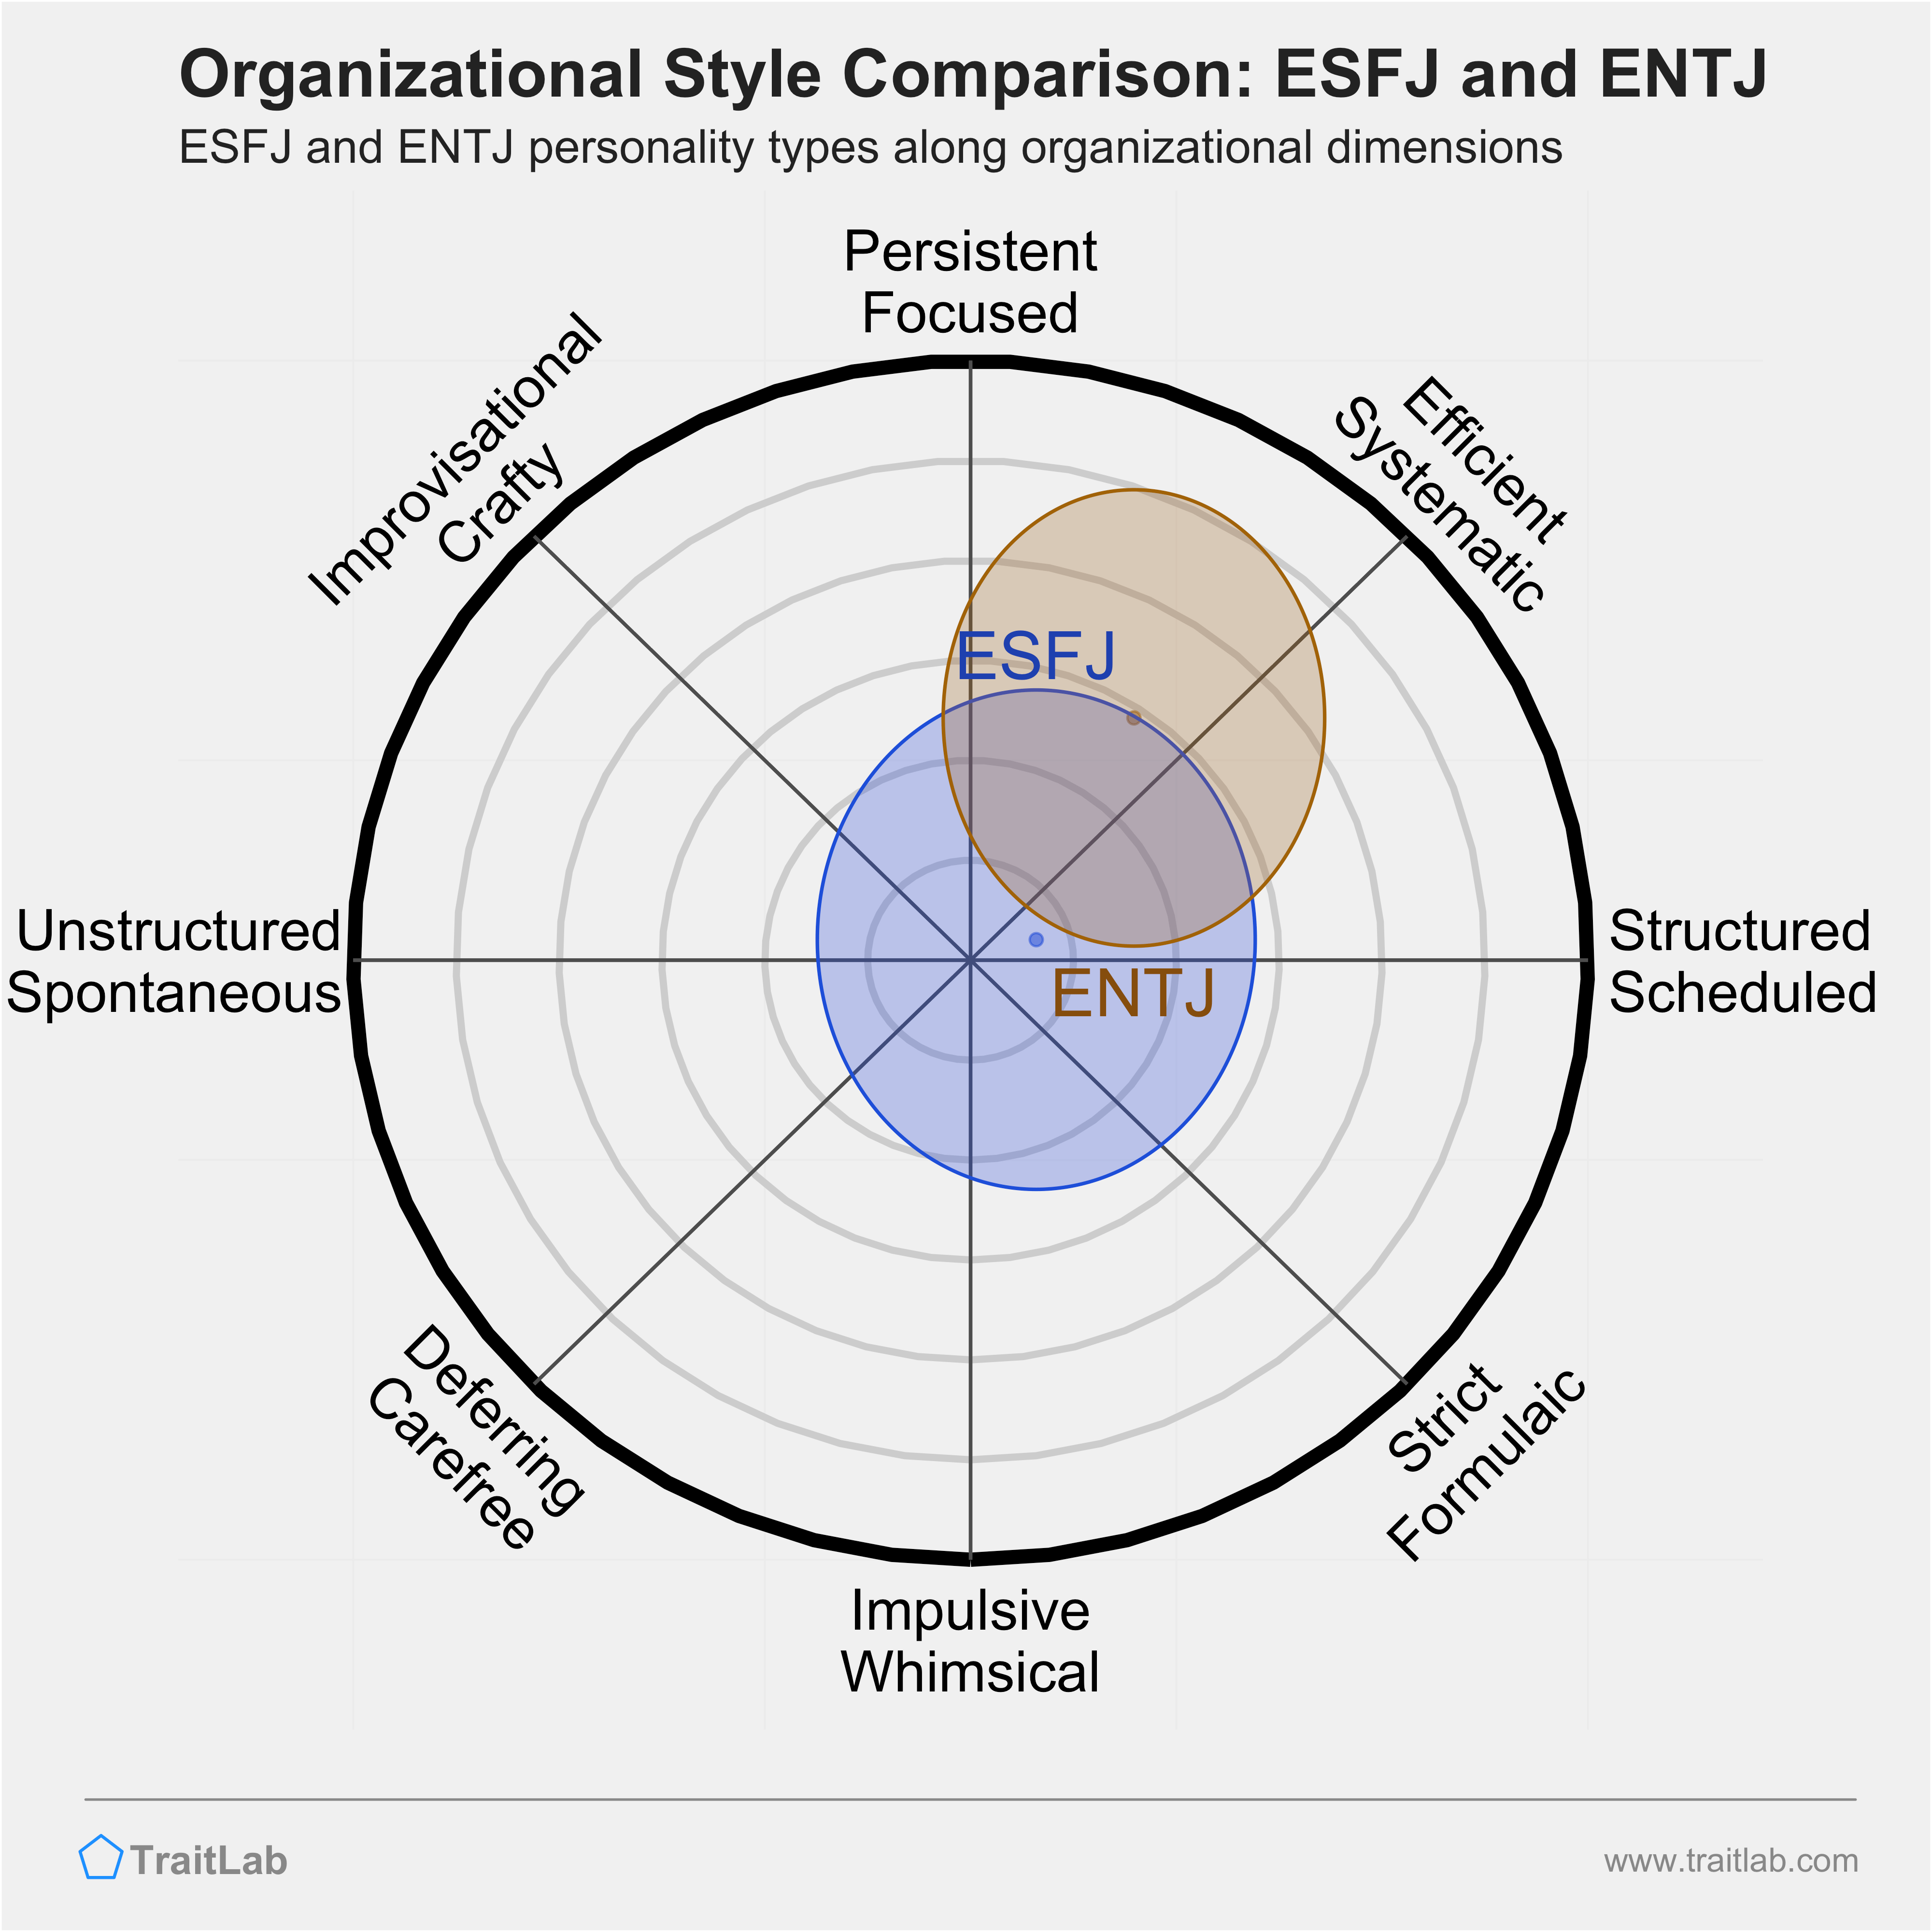 ESFJ and ENTJ comparison across organizational dimensions